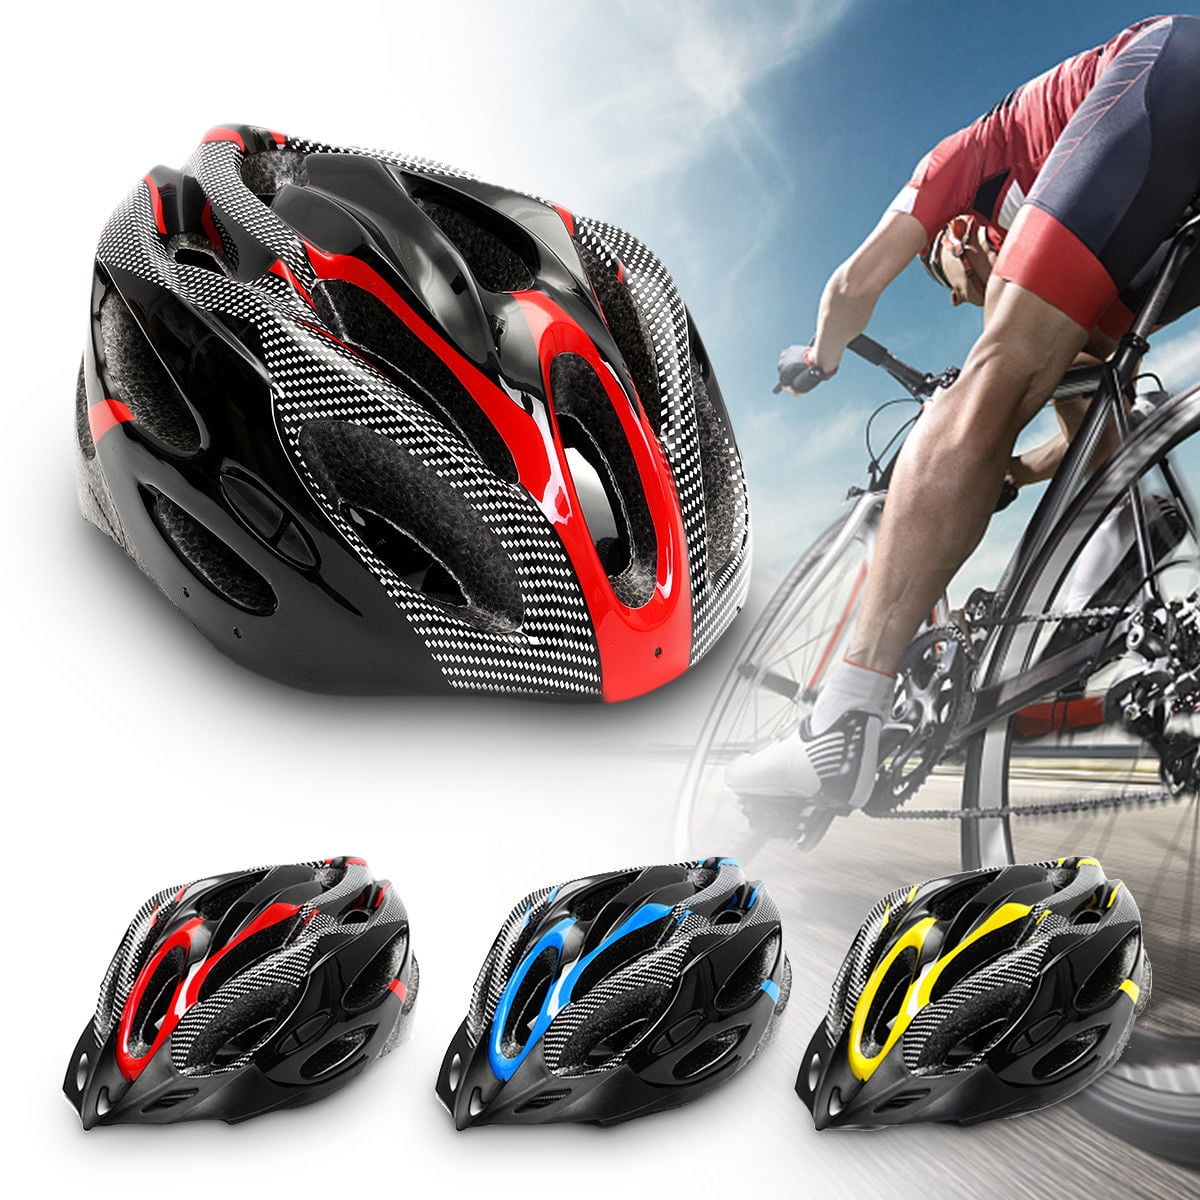 UK Bicycle Helmet Bike Cycling Adult Adjustable Safety Bicycle Equipment 21 Hole 